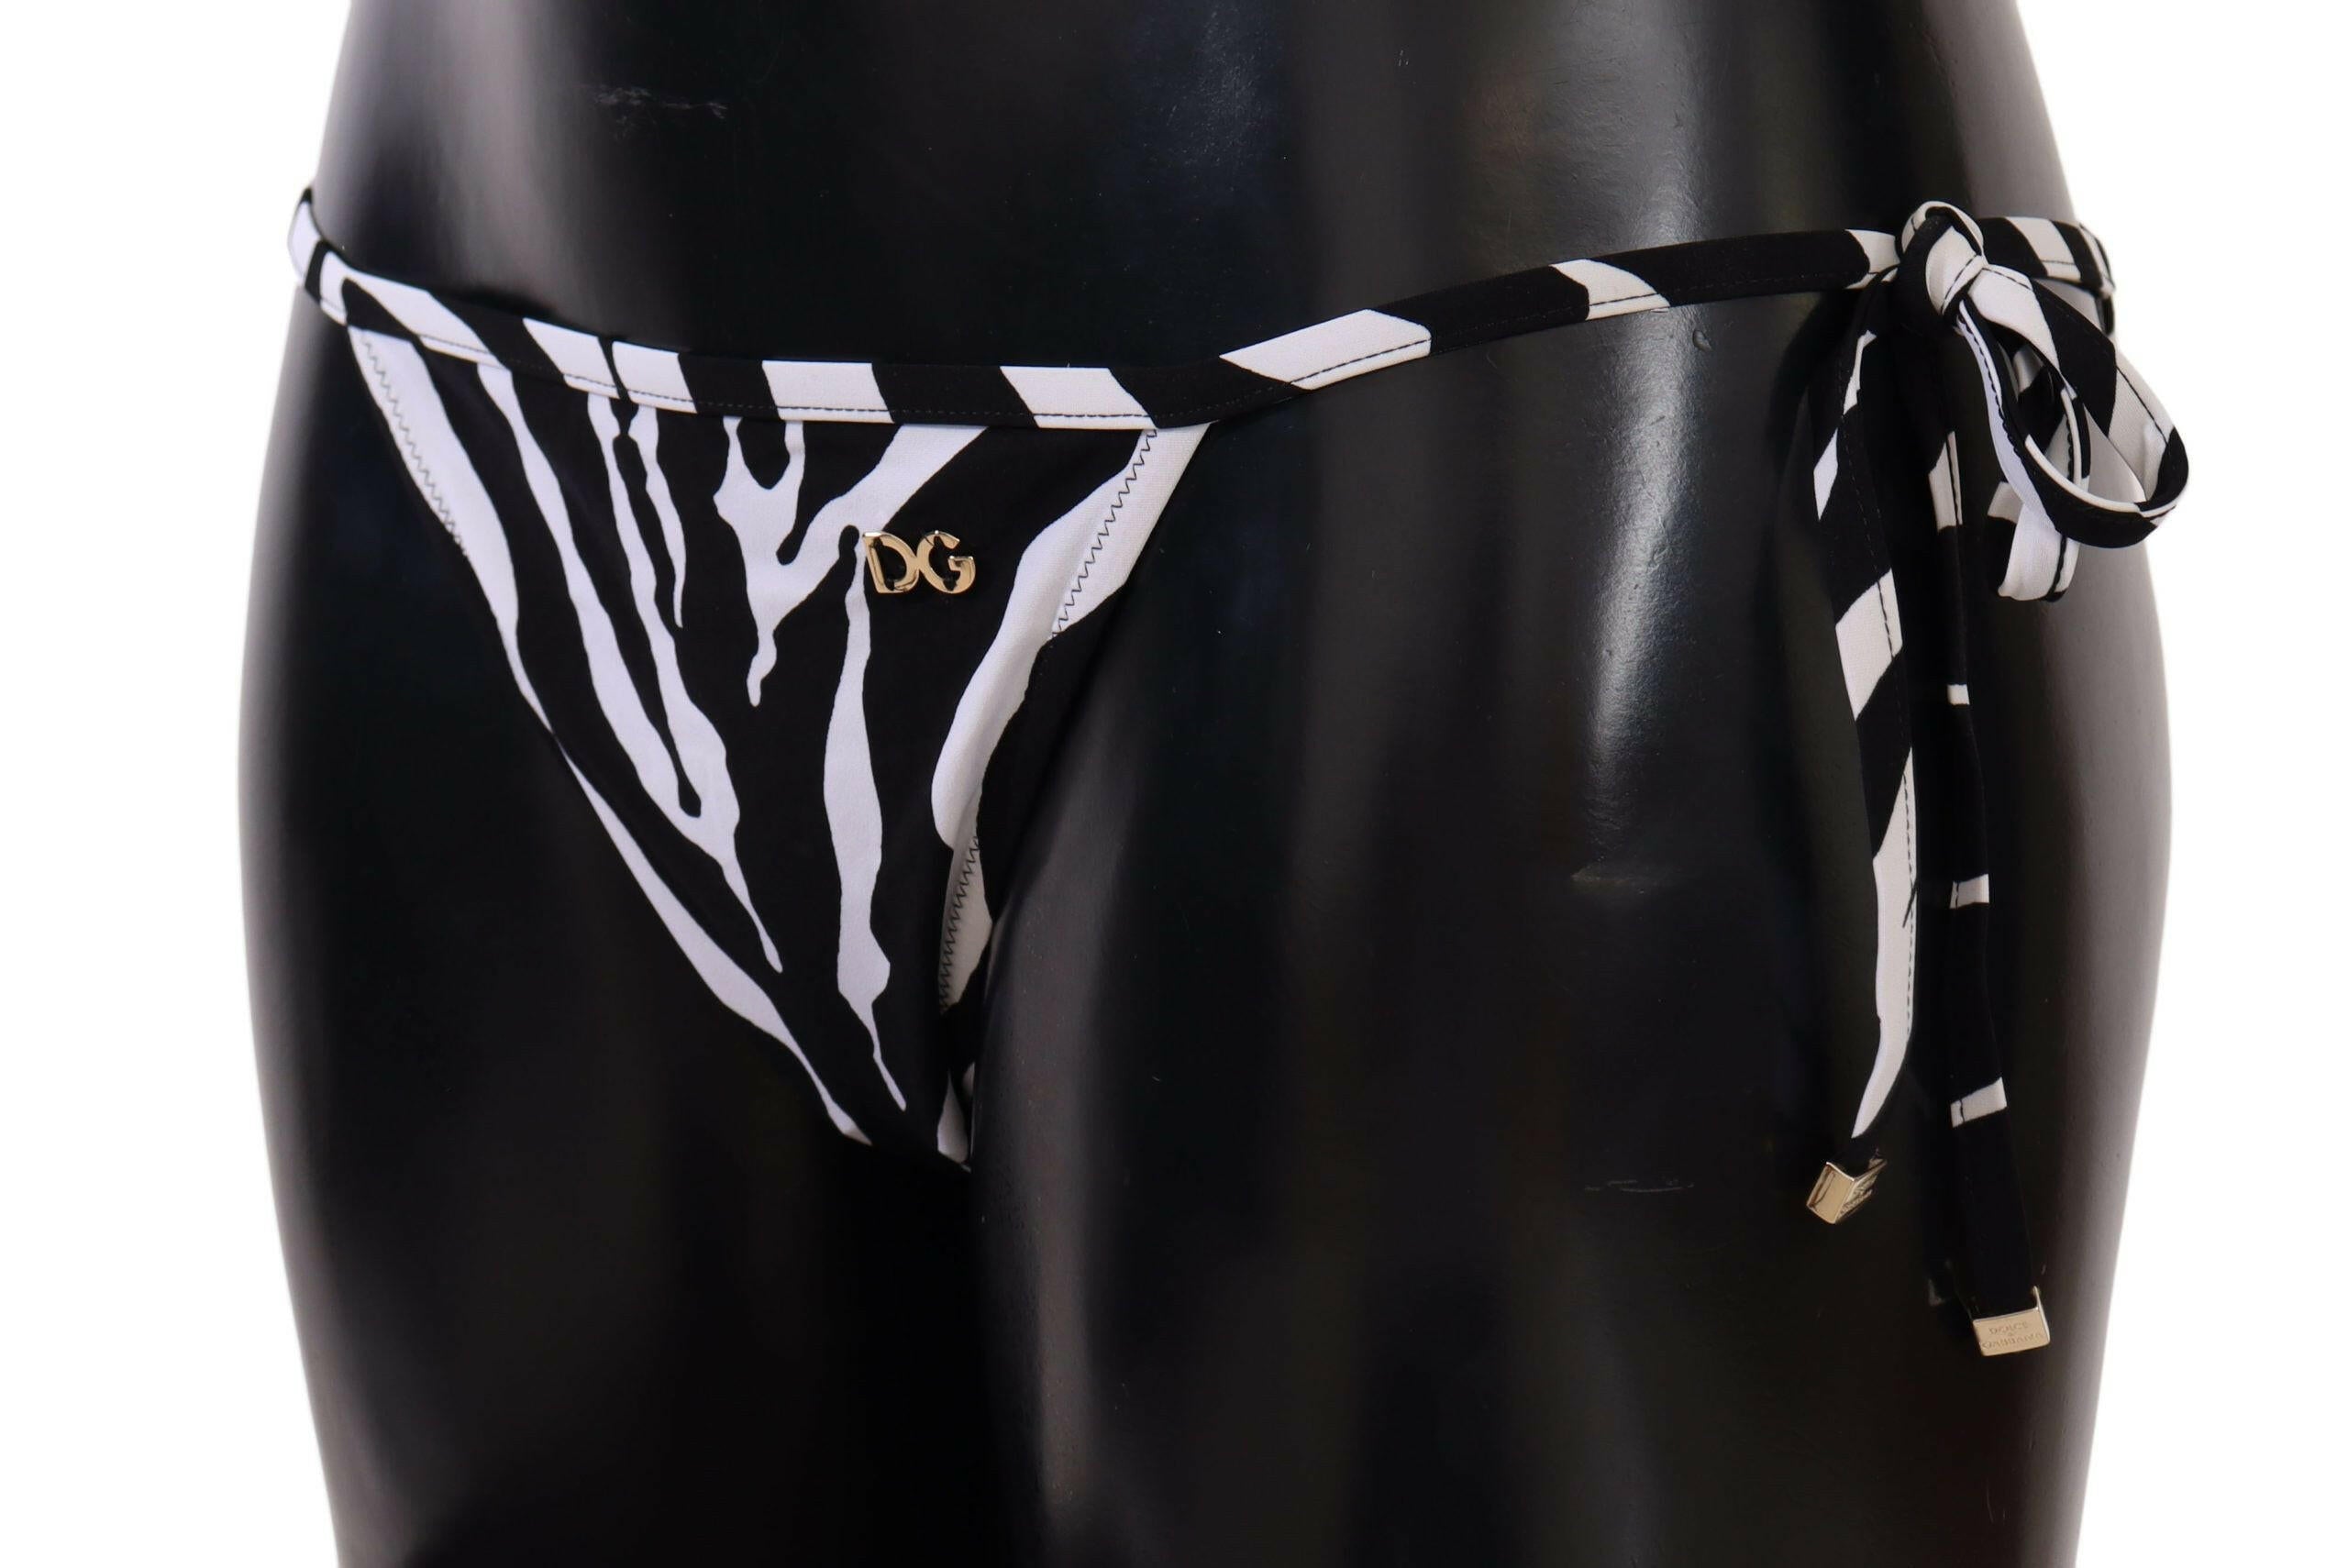 Dolce & Gabbana Black White Zebra Swimsuit Bikini Bottom Swimwear - GENUINE AUTHENTIC BRAND LLC  